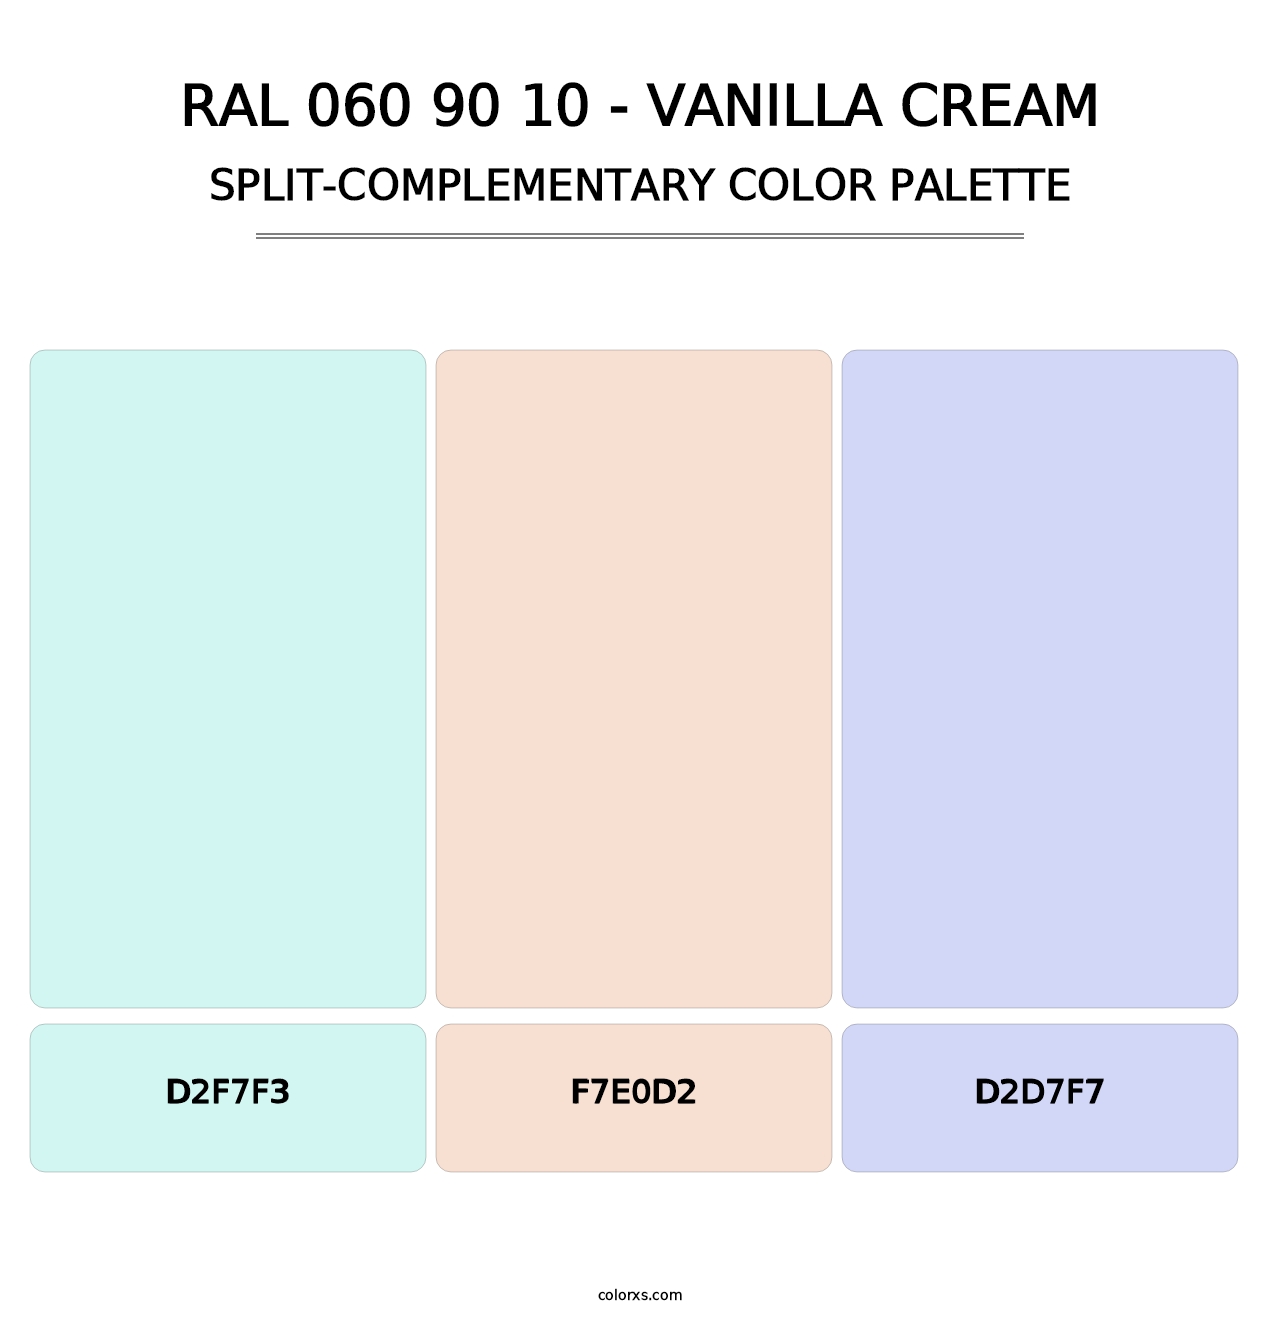 RAL 060 90 10 - Vanilla Cream - Split-Complementary Color Palette